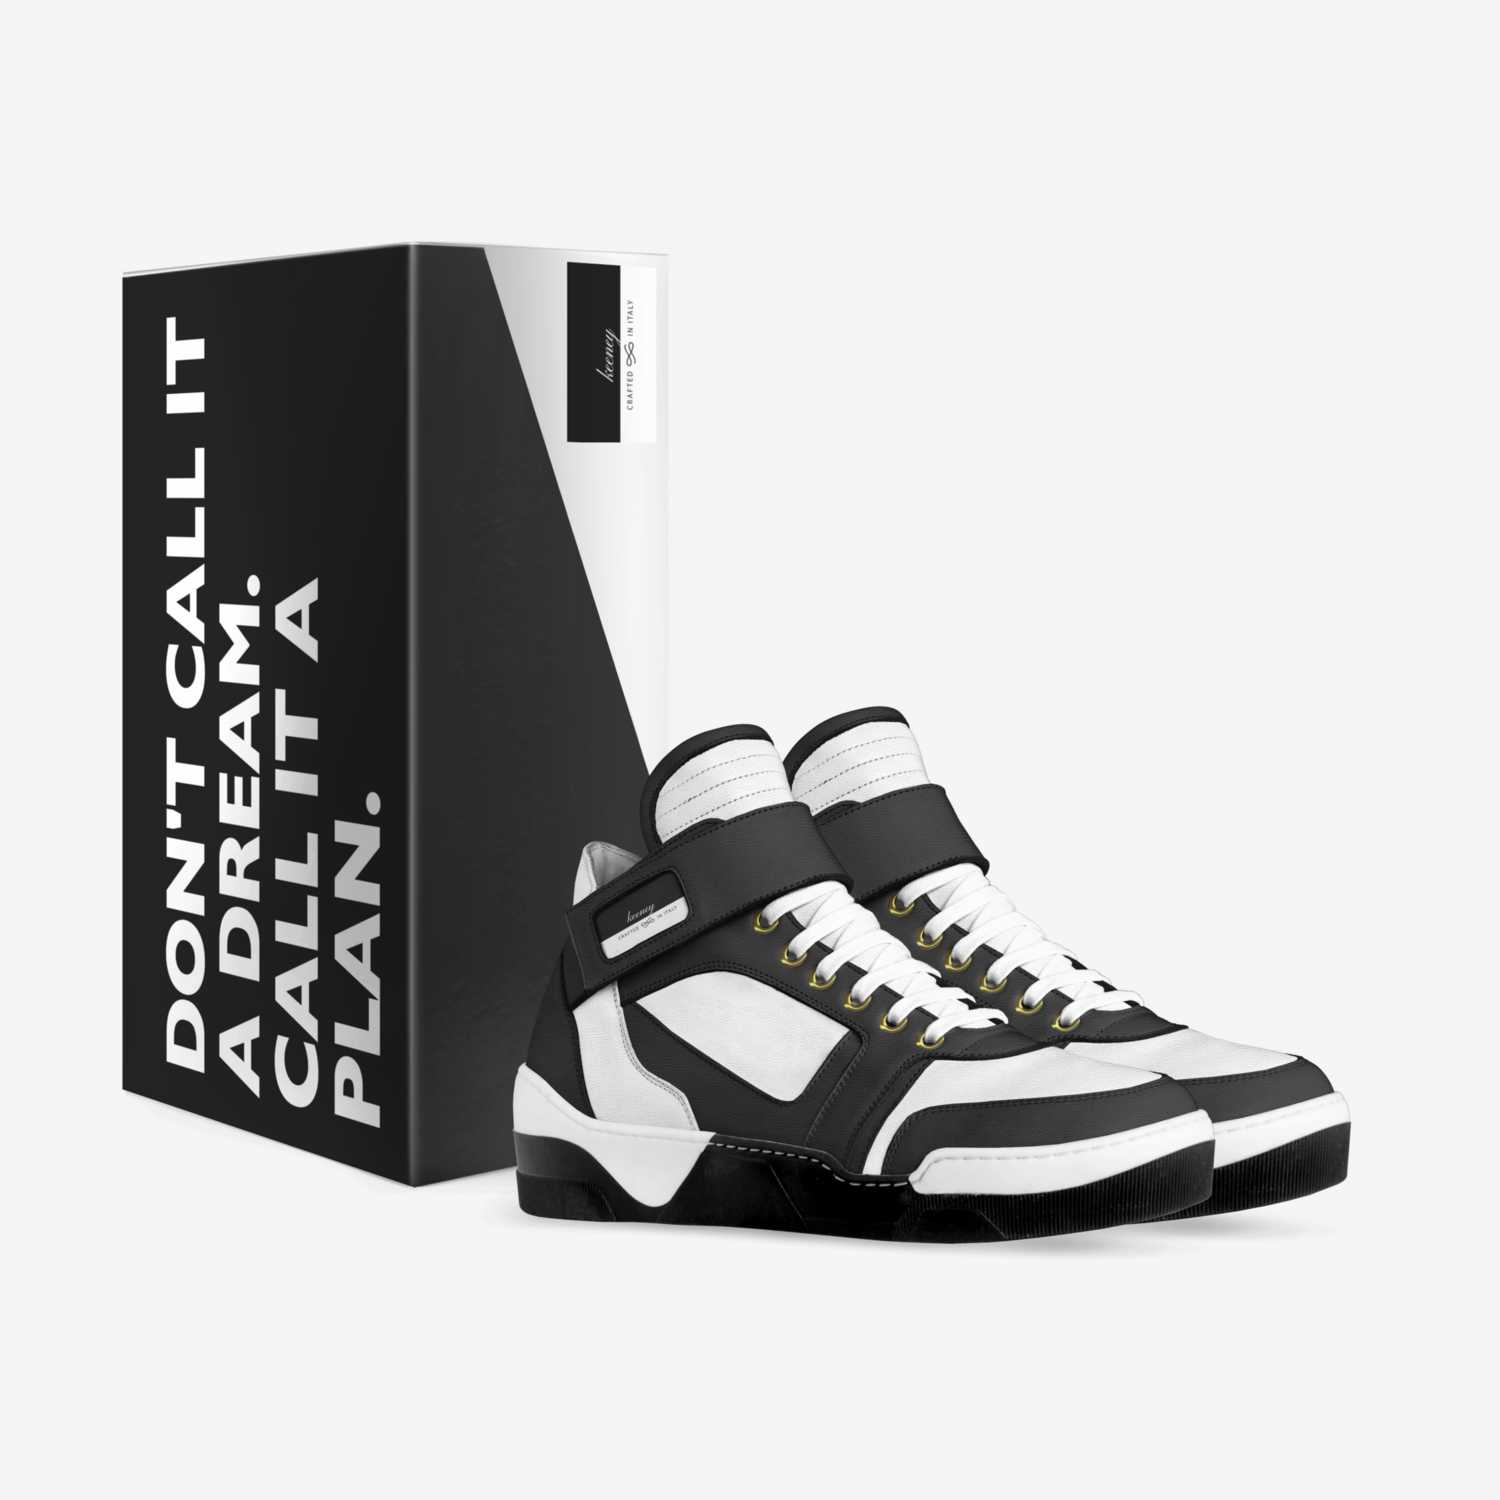 keeney custom made in Italy shoes by Jeffrey Keeney | Box view